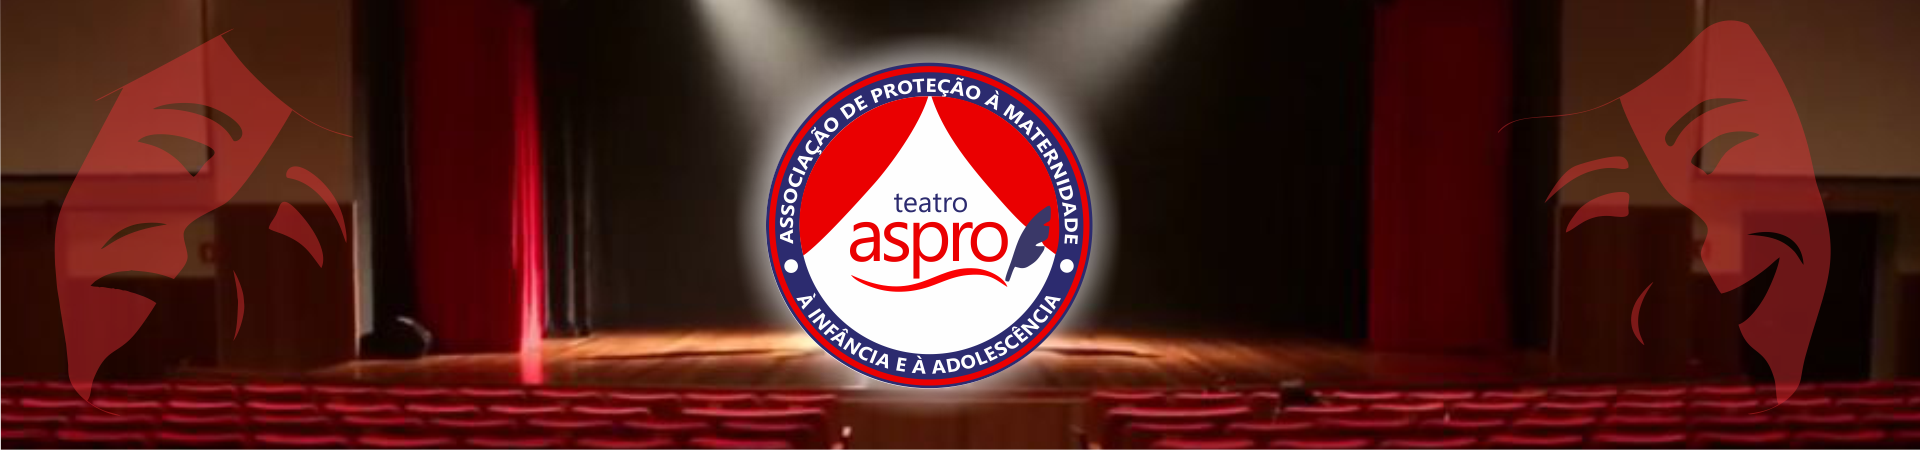 Teatro Aspro Osasco São Paulo